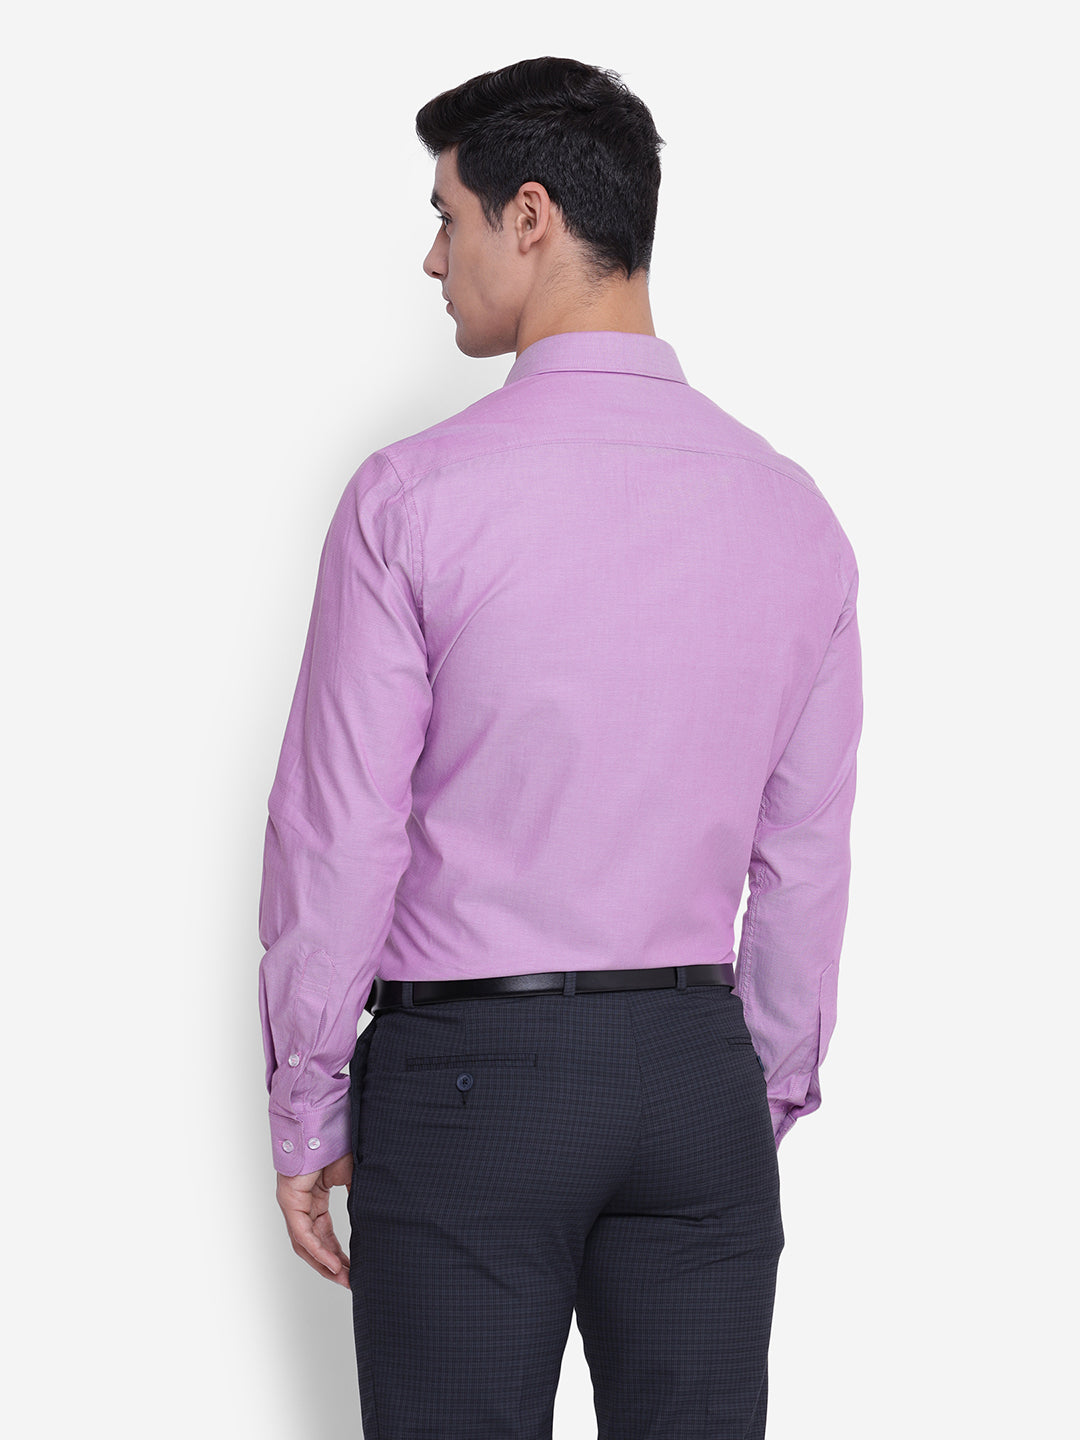 Solid Purple Slim Fit Formal Shirt